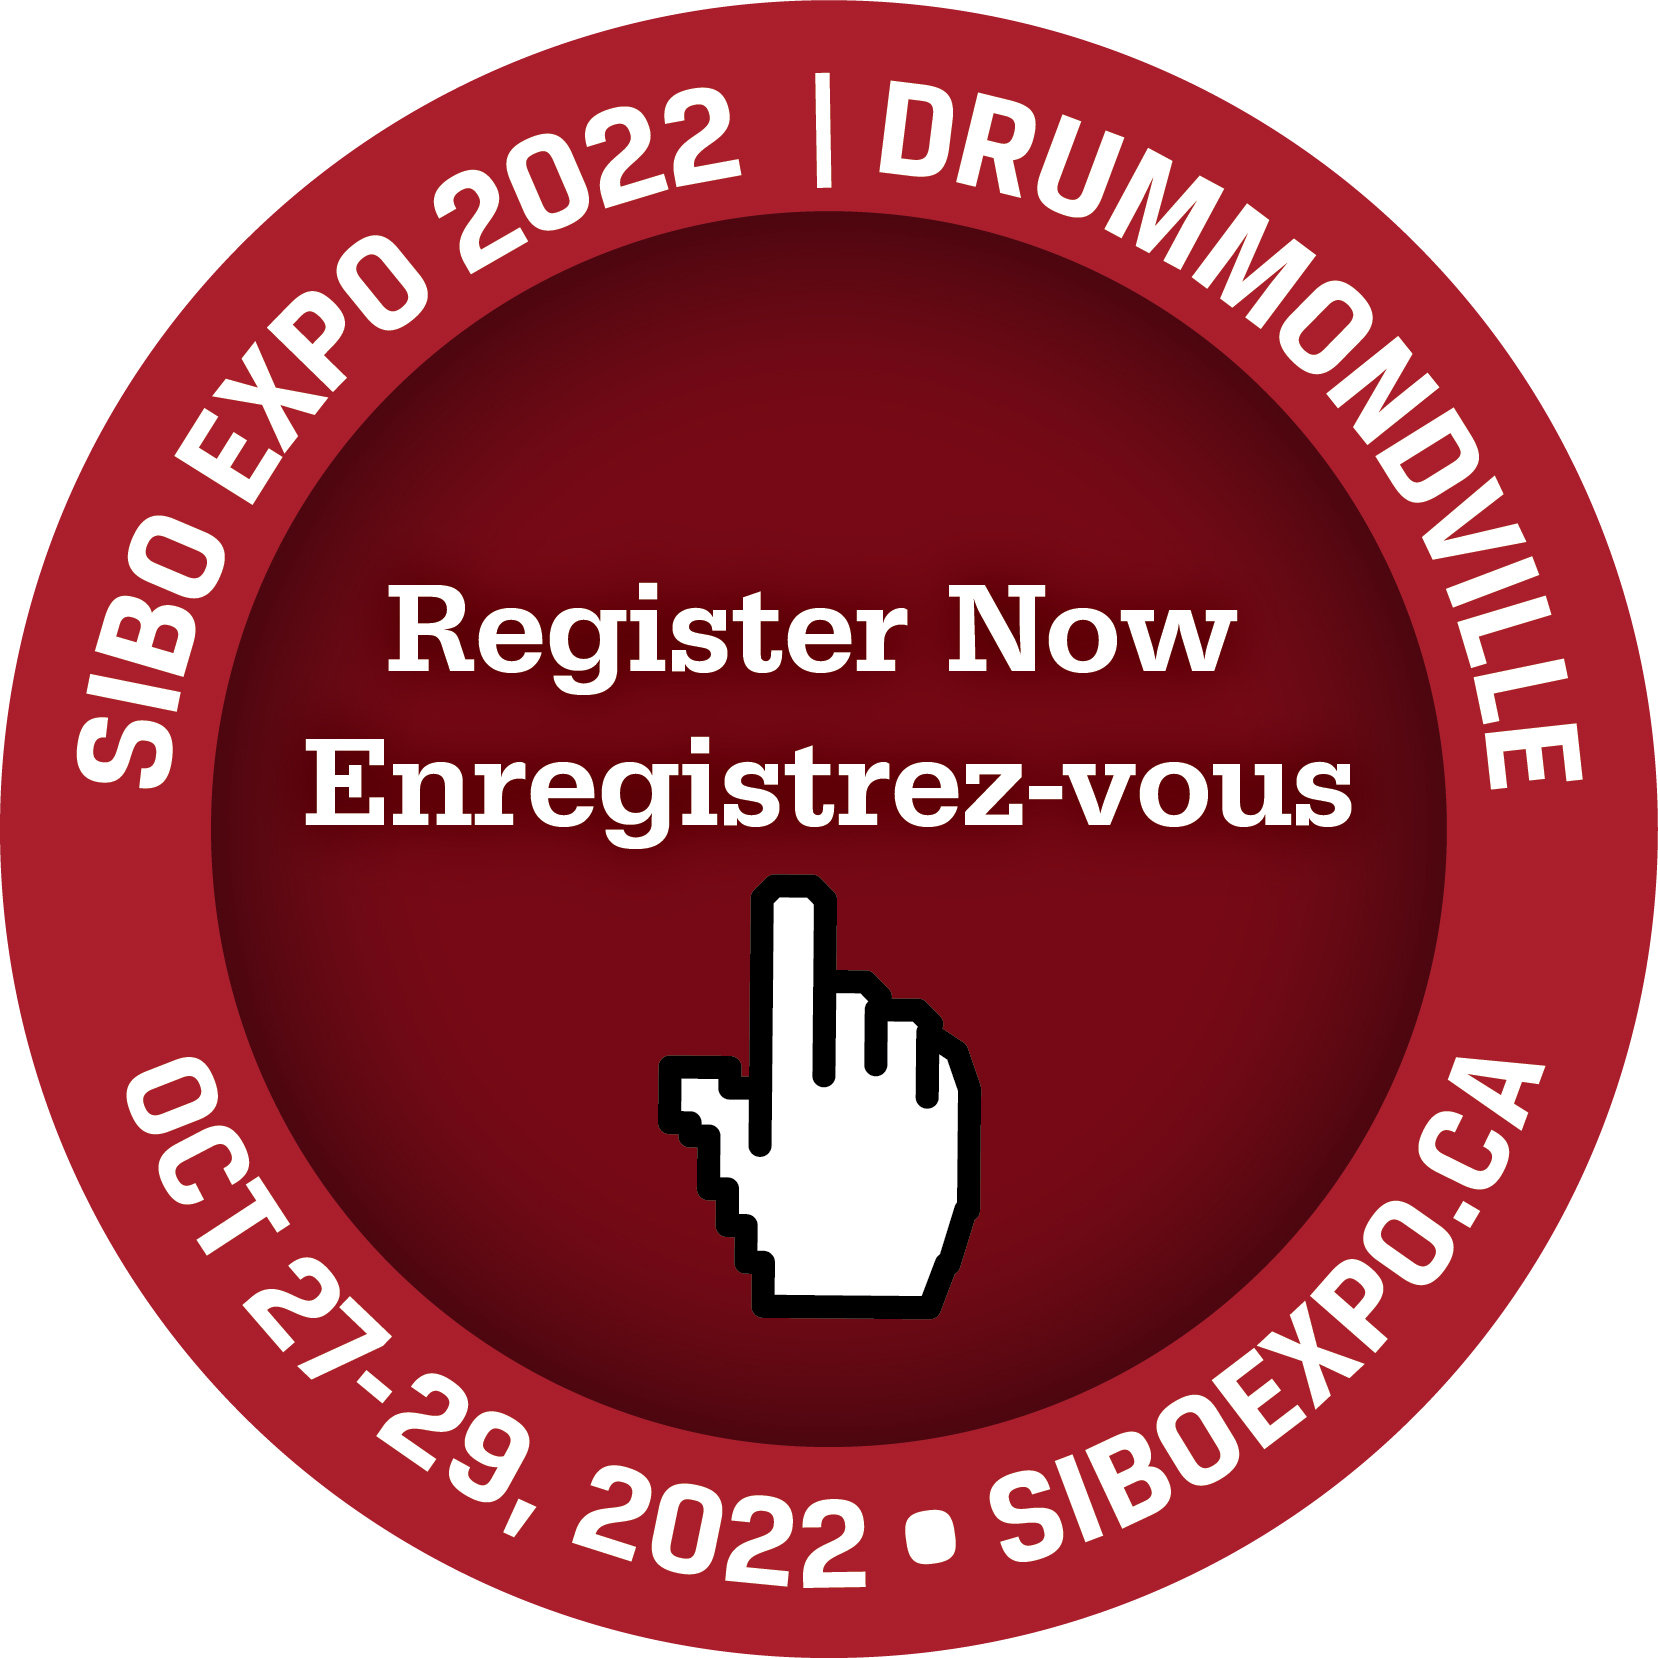 SIBO 2022 Registration